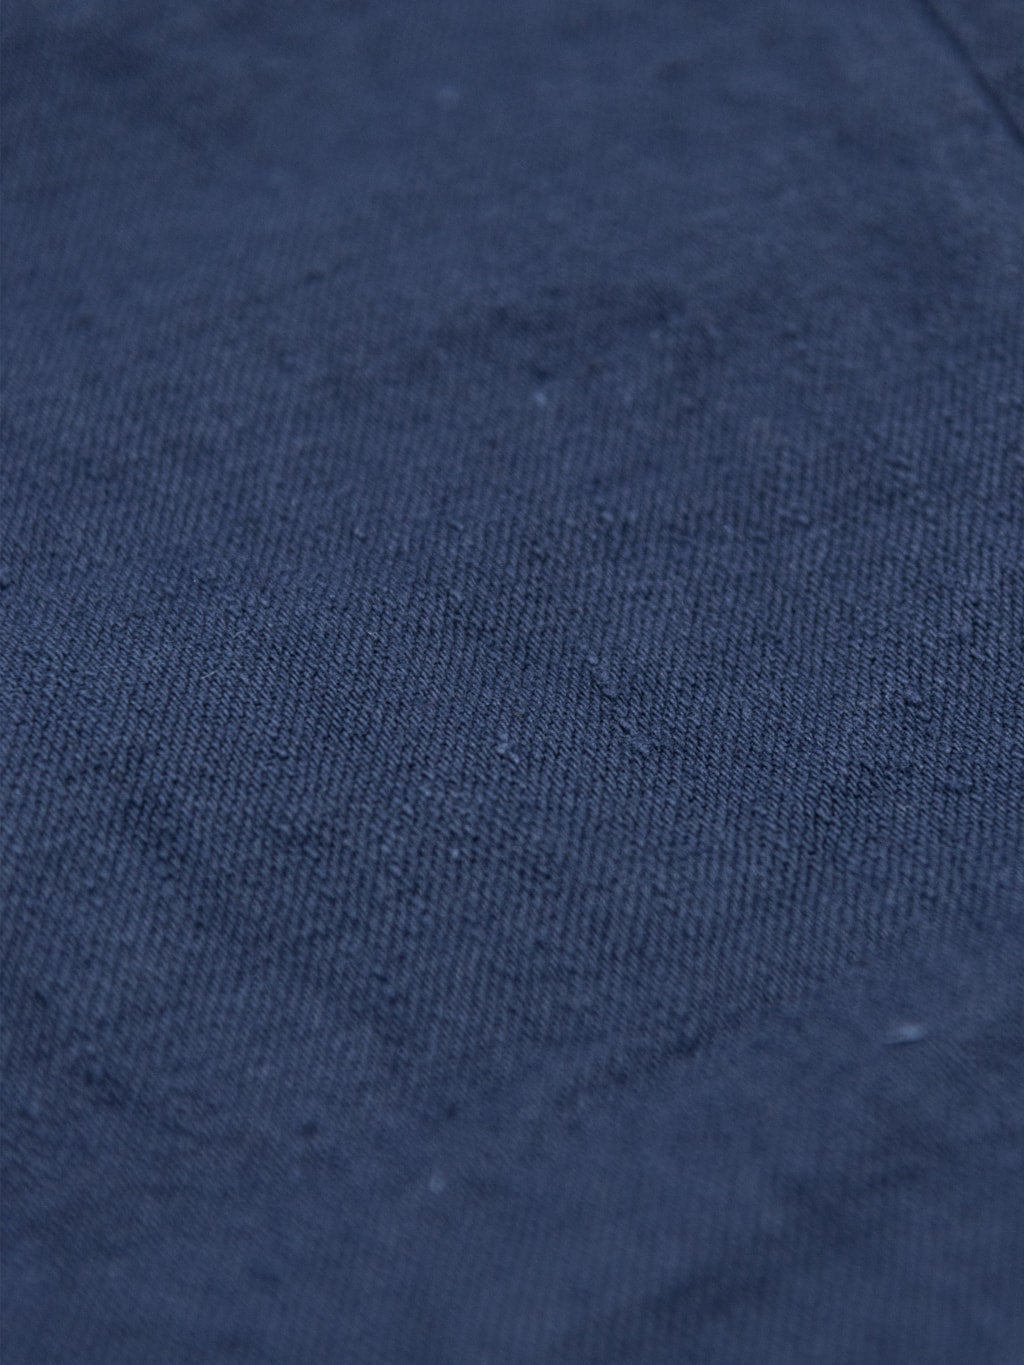 ONI Denim 612 Super Low Tension Navy  Jeans slubby cotton fabric